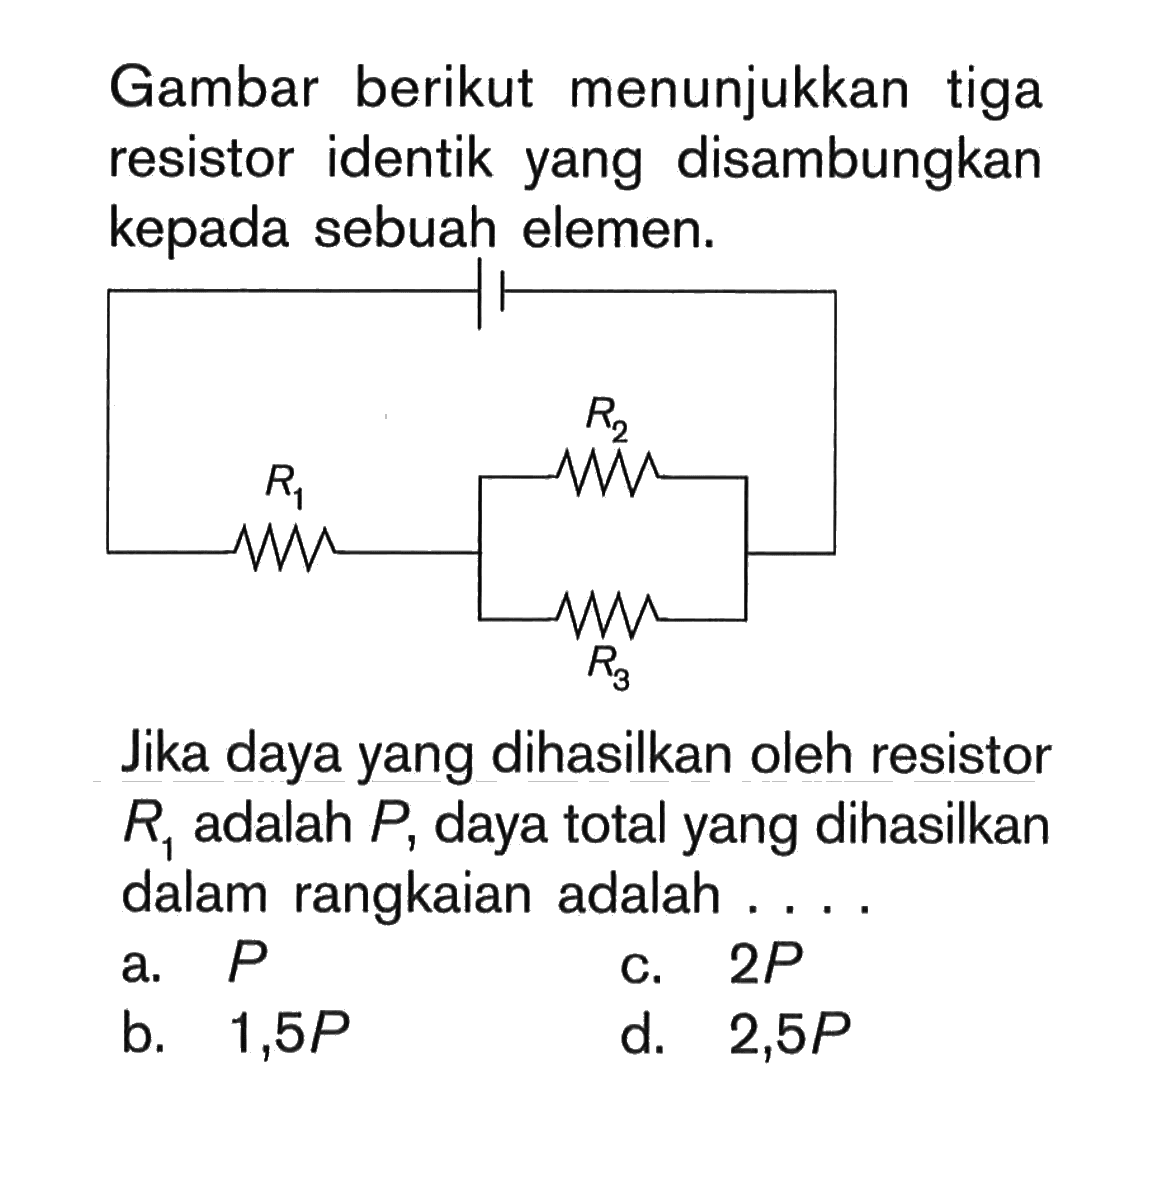 Gambar berikut menunjukkan tiga resistor identik yang disambungkan kepada sebuah elemen. Jika daya yang dihasilkan oleh resistor R1 adalah P, daya total yang dihasilkan dalam rangkaian adalah....